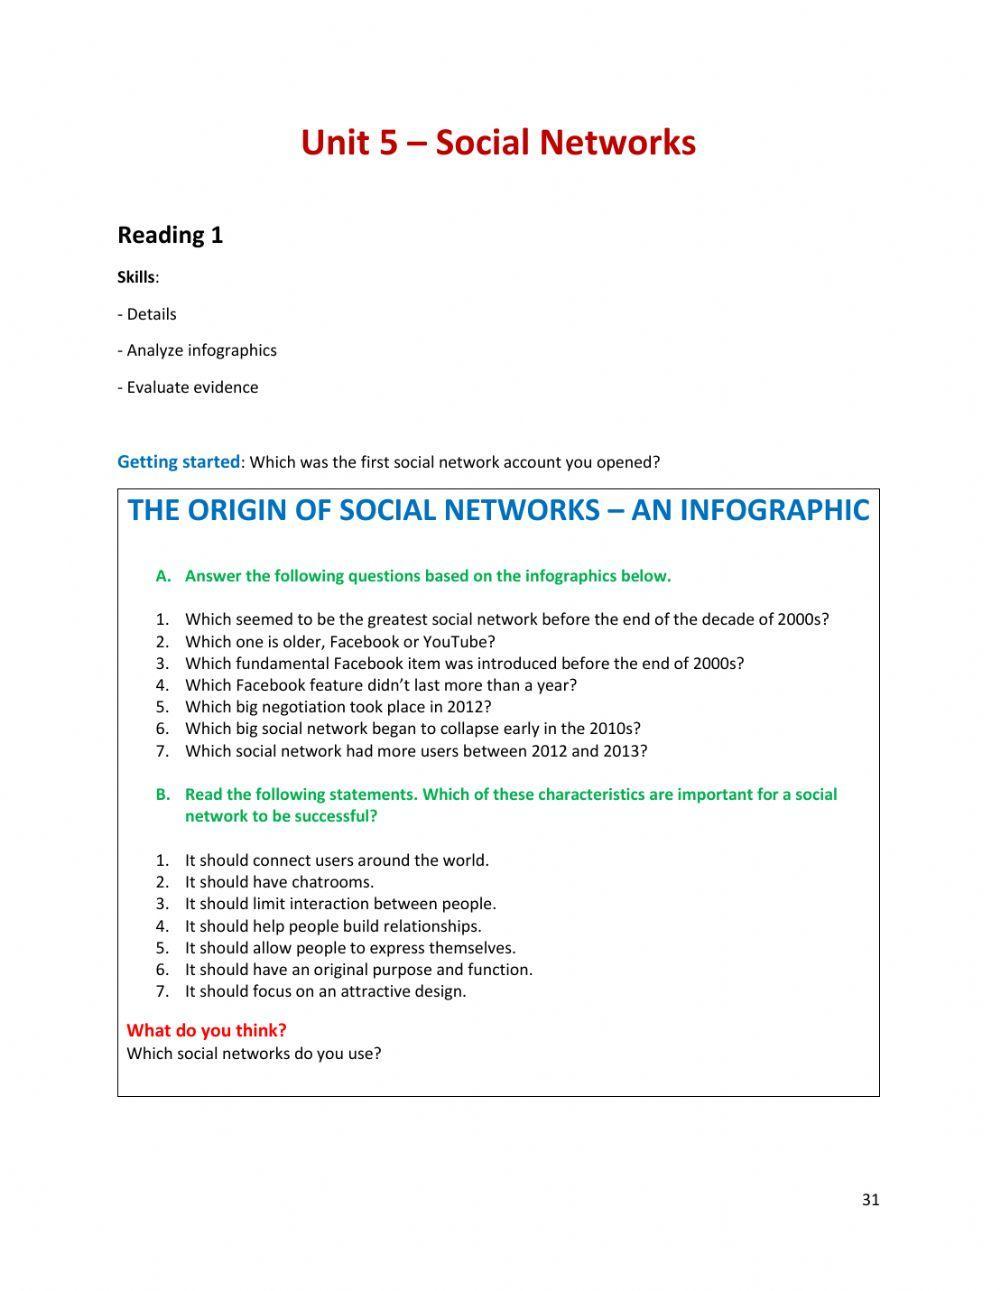 Unit 5 - Text 1: Social networks